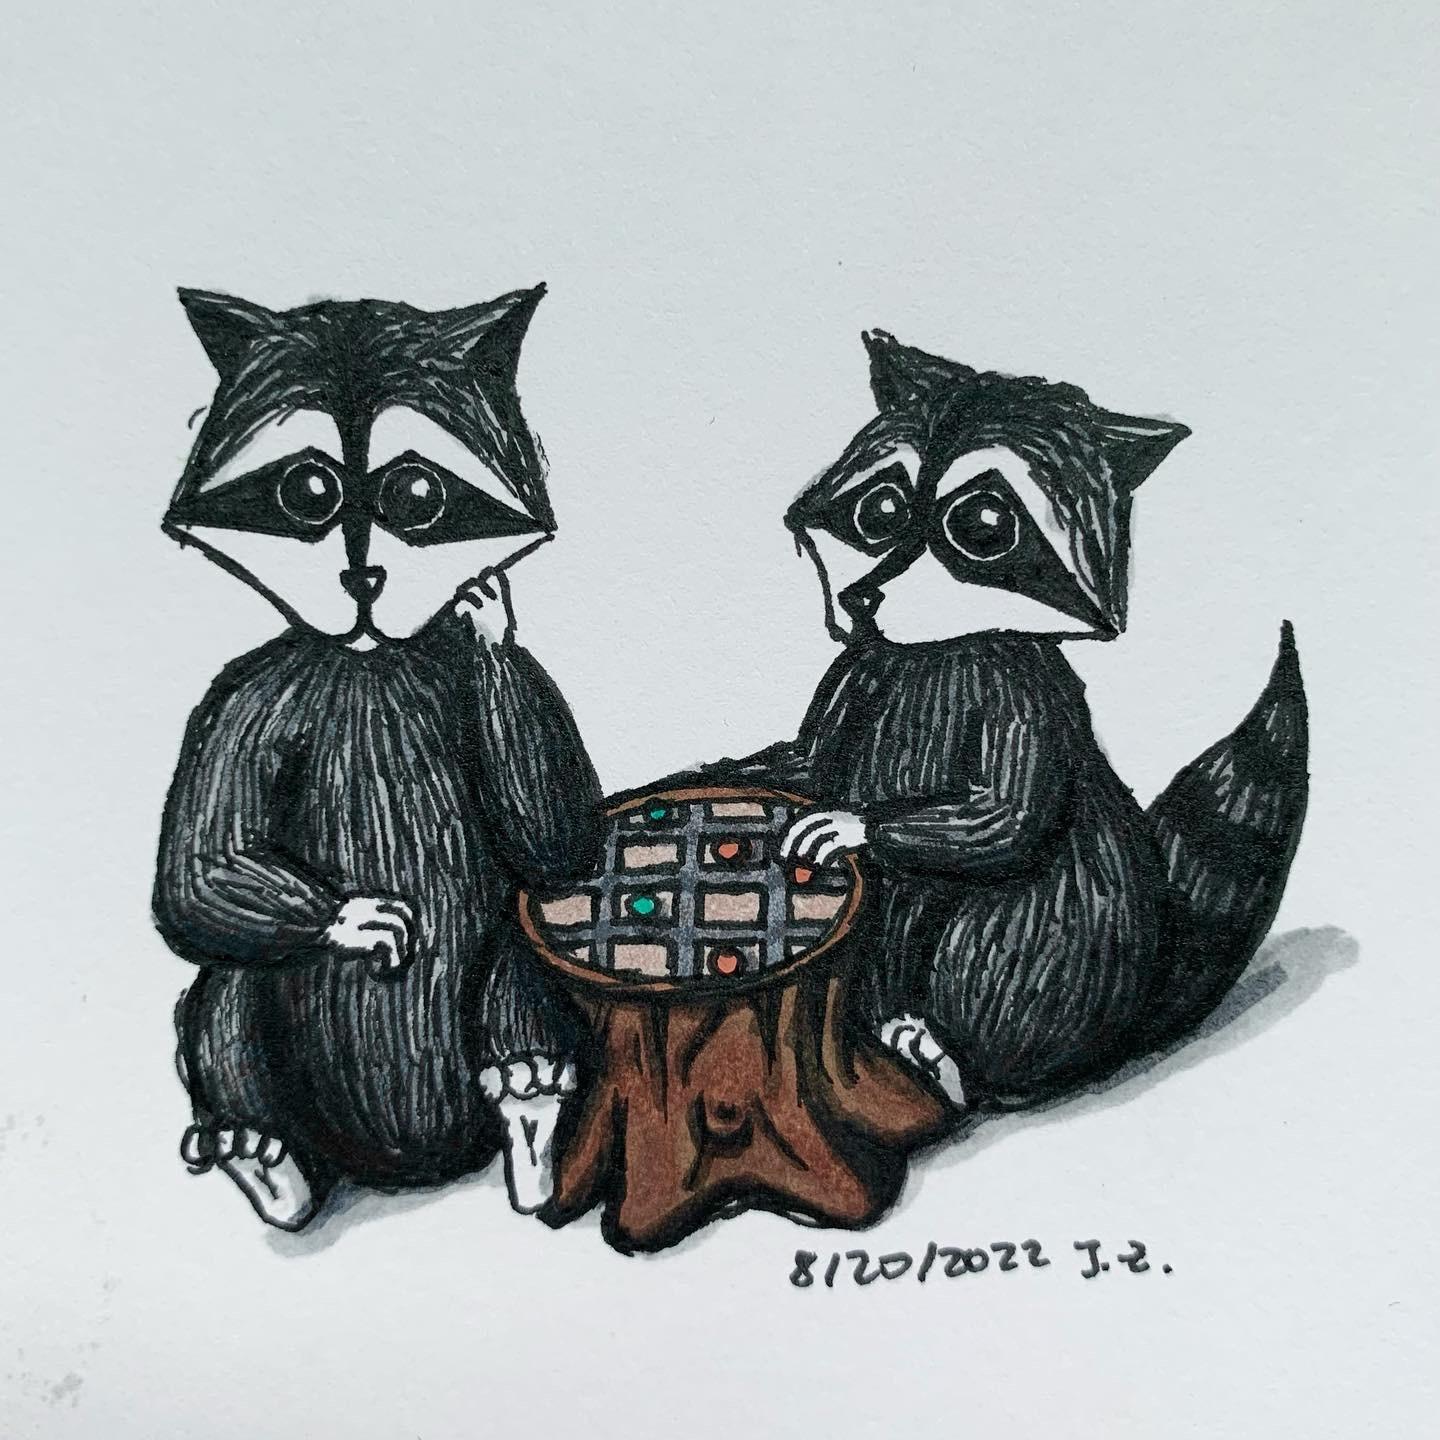 Raccoon siblings play mini chess on a tree stump 8/20/2022 Sketchdaily